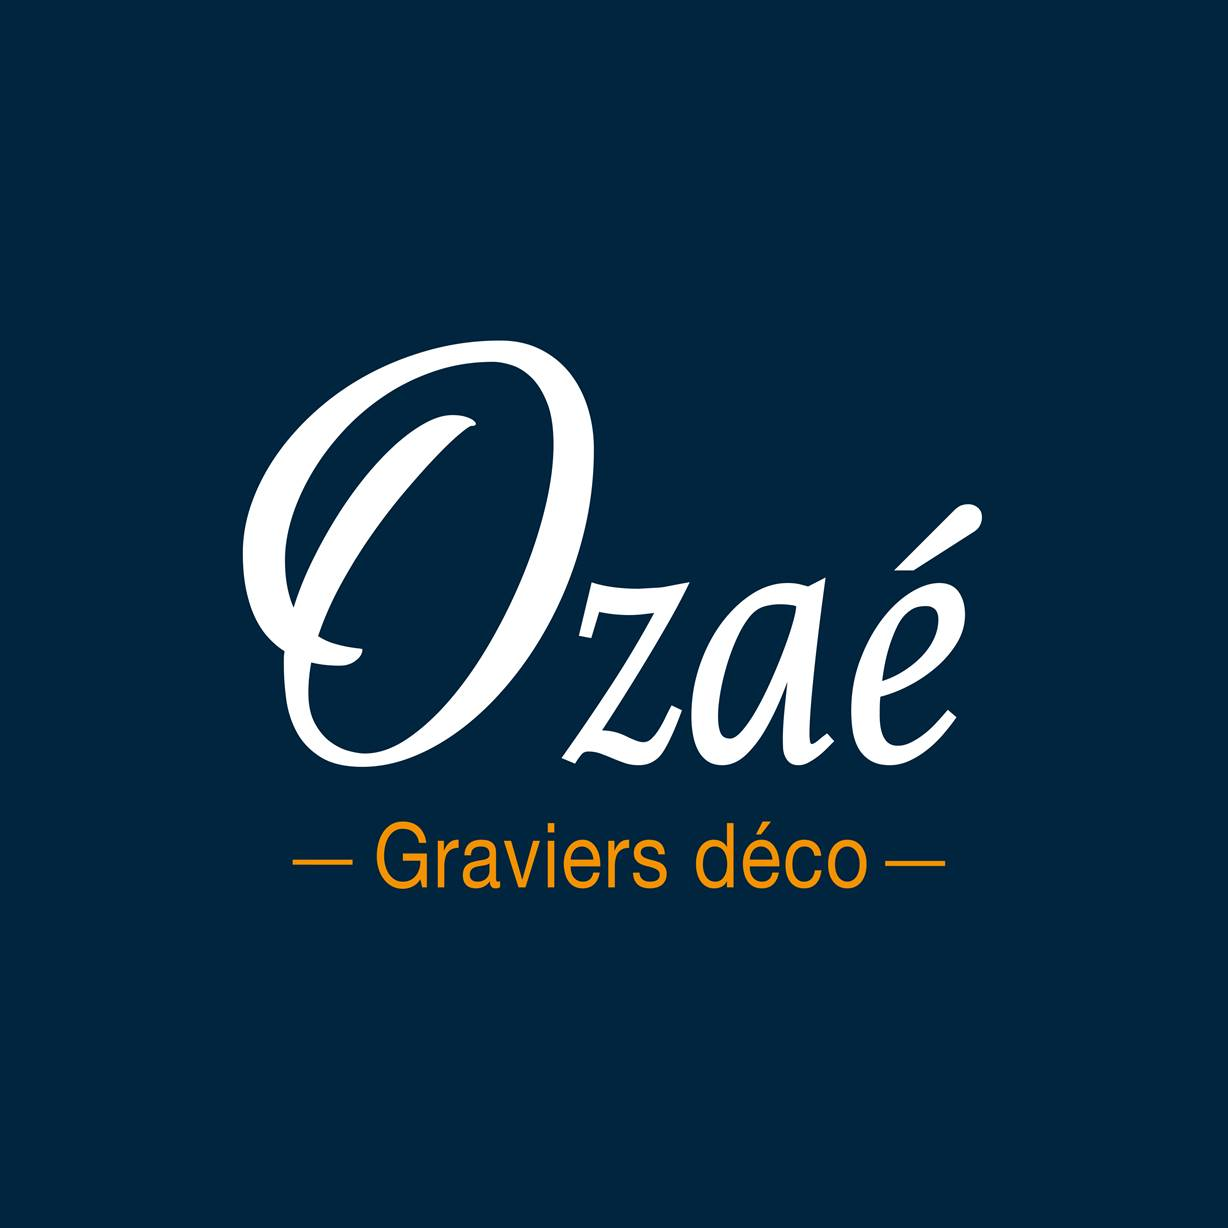 OZAE - Graviers déco -